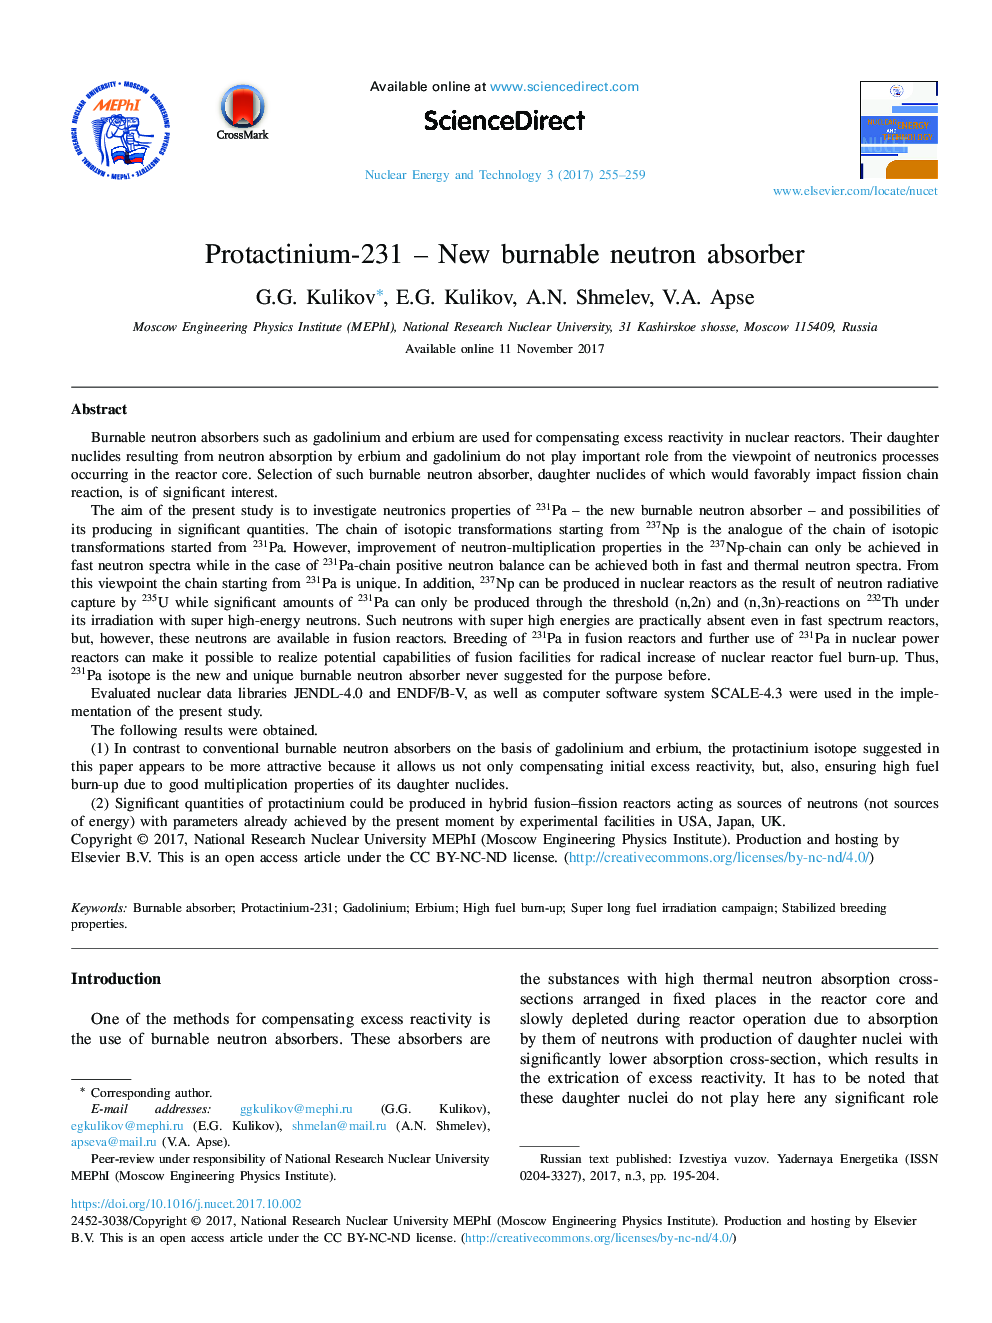 Protactinium-231 - New burnable neutron absorber